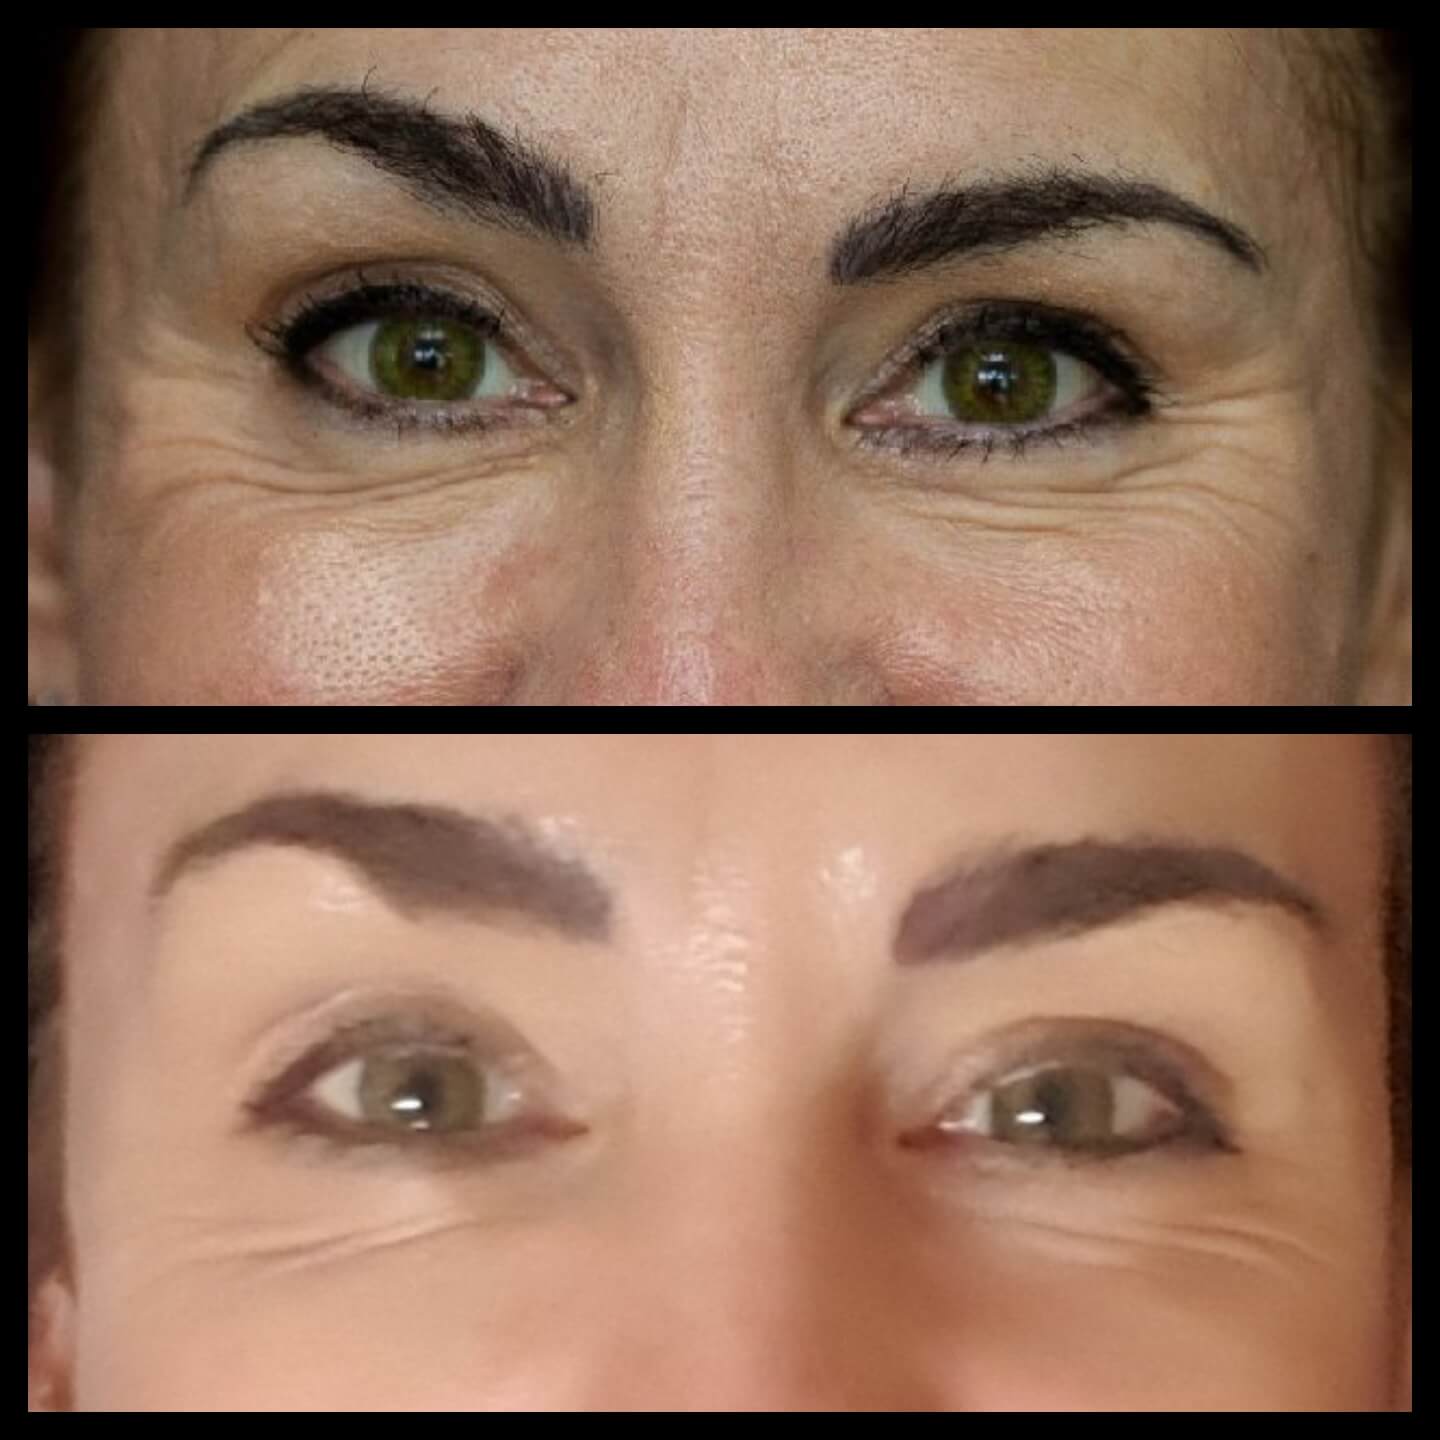 Laura's facial results